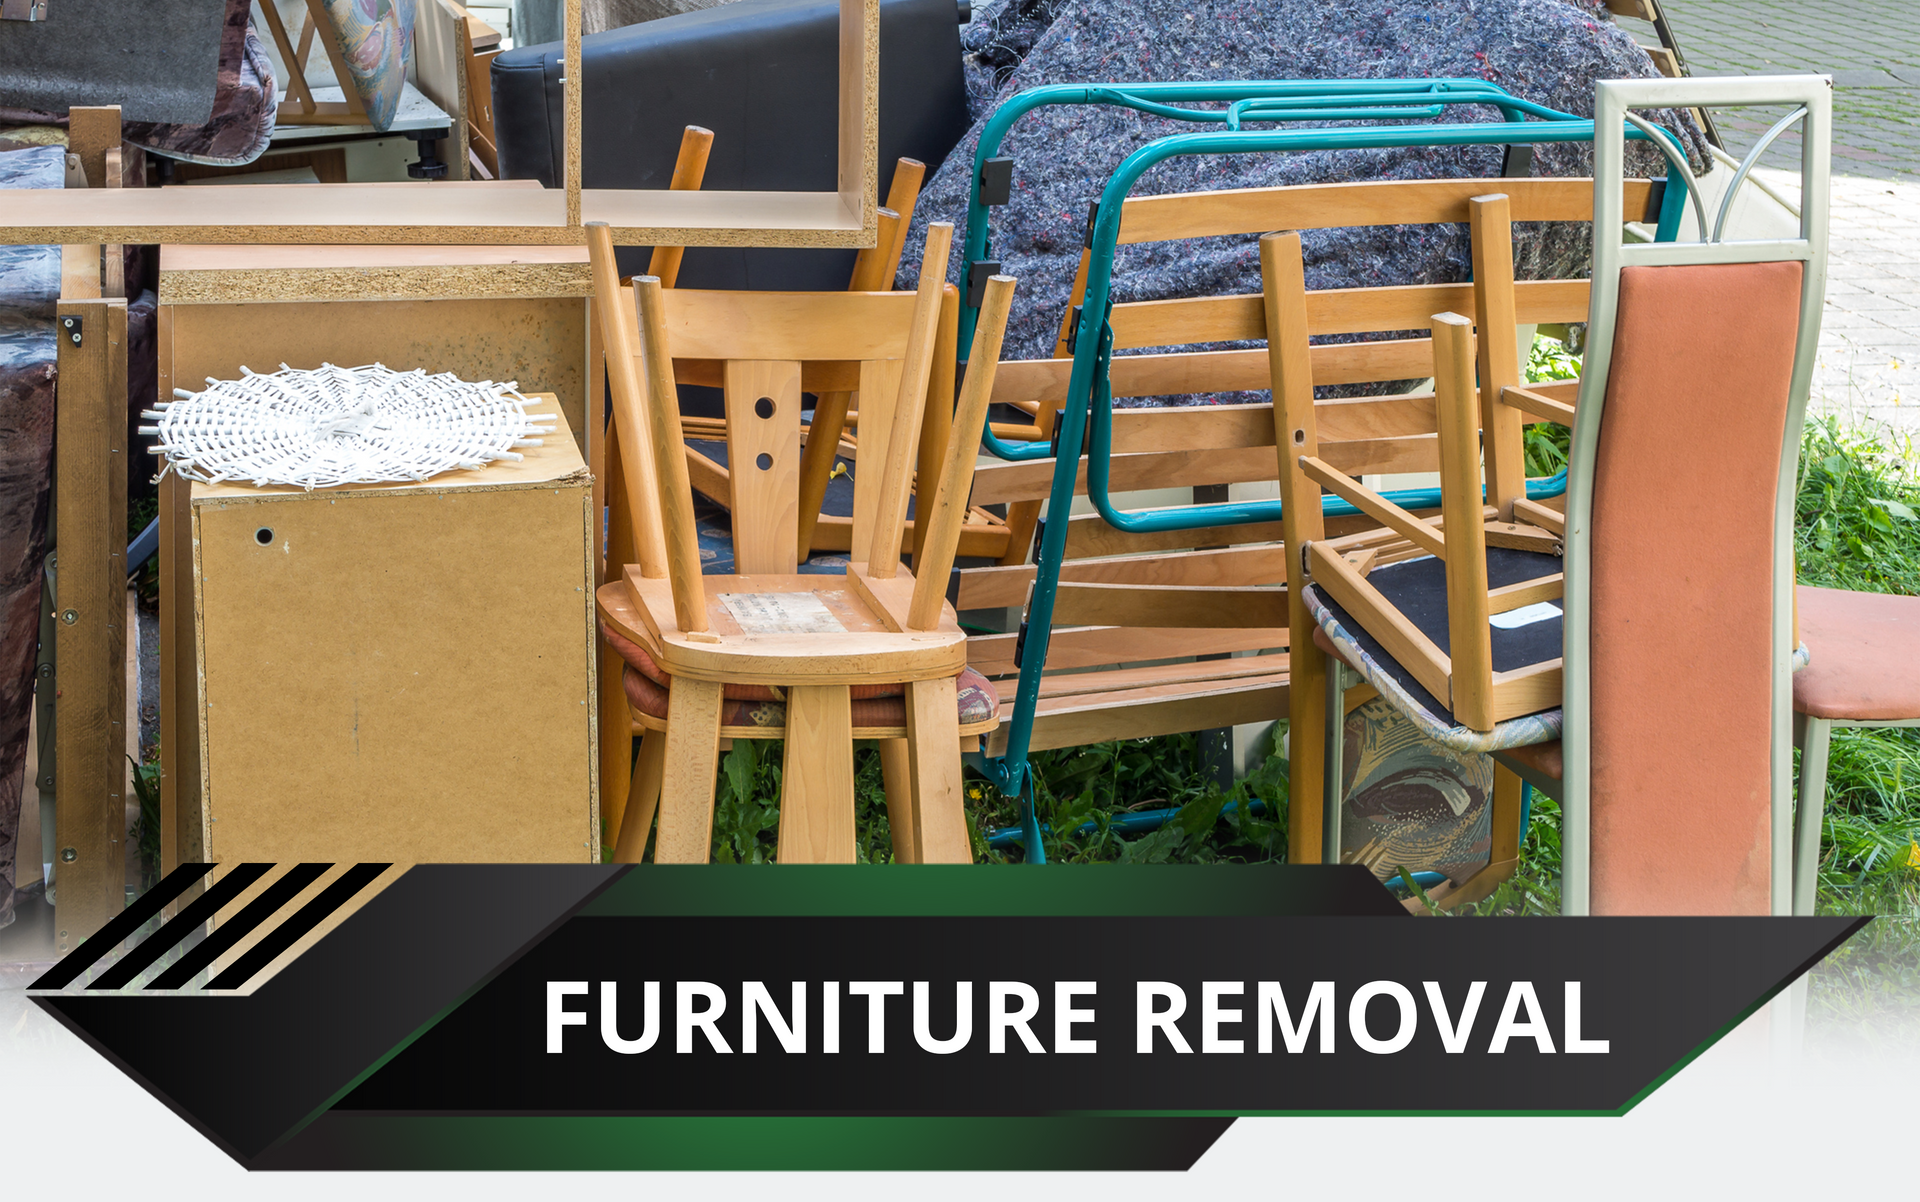 Furniture removal in Clovis